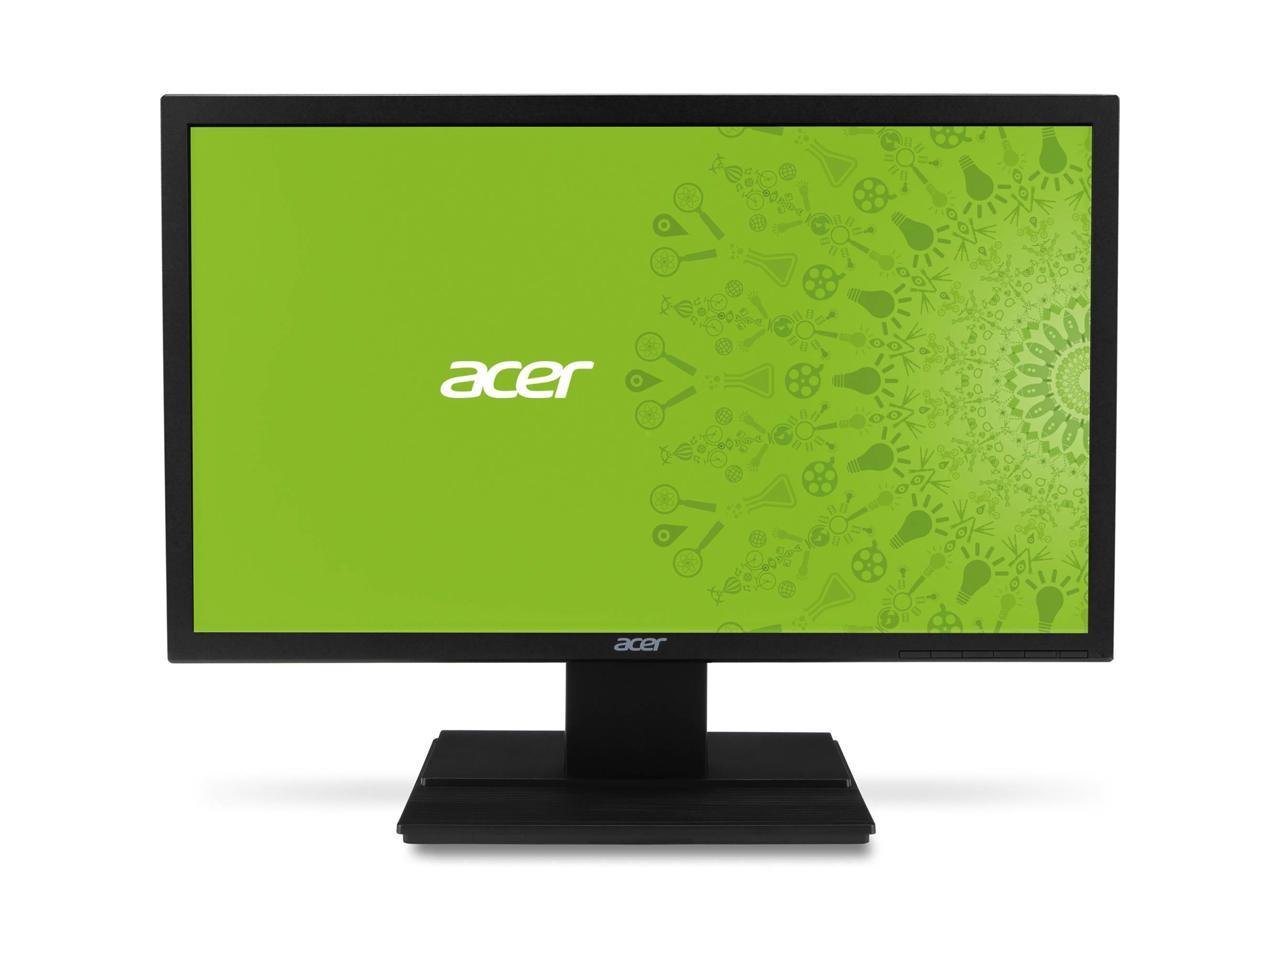 Acer V246HL DVI+VGA 1920x1080 24" Monitor, Black